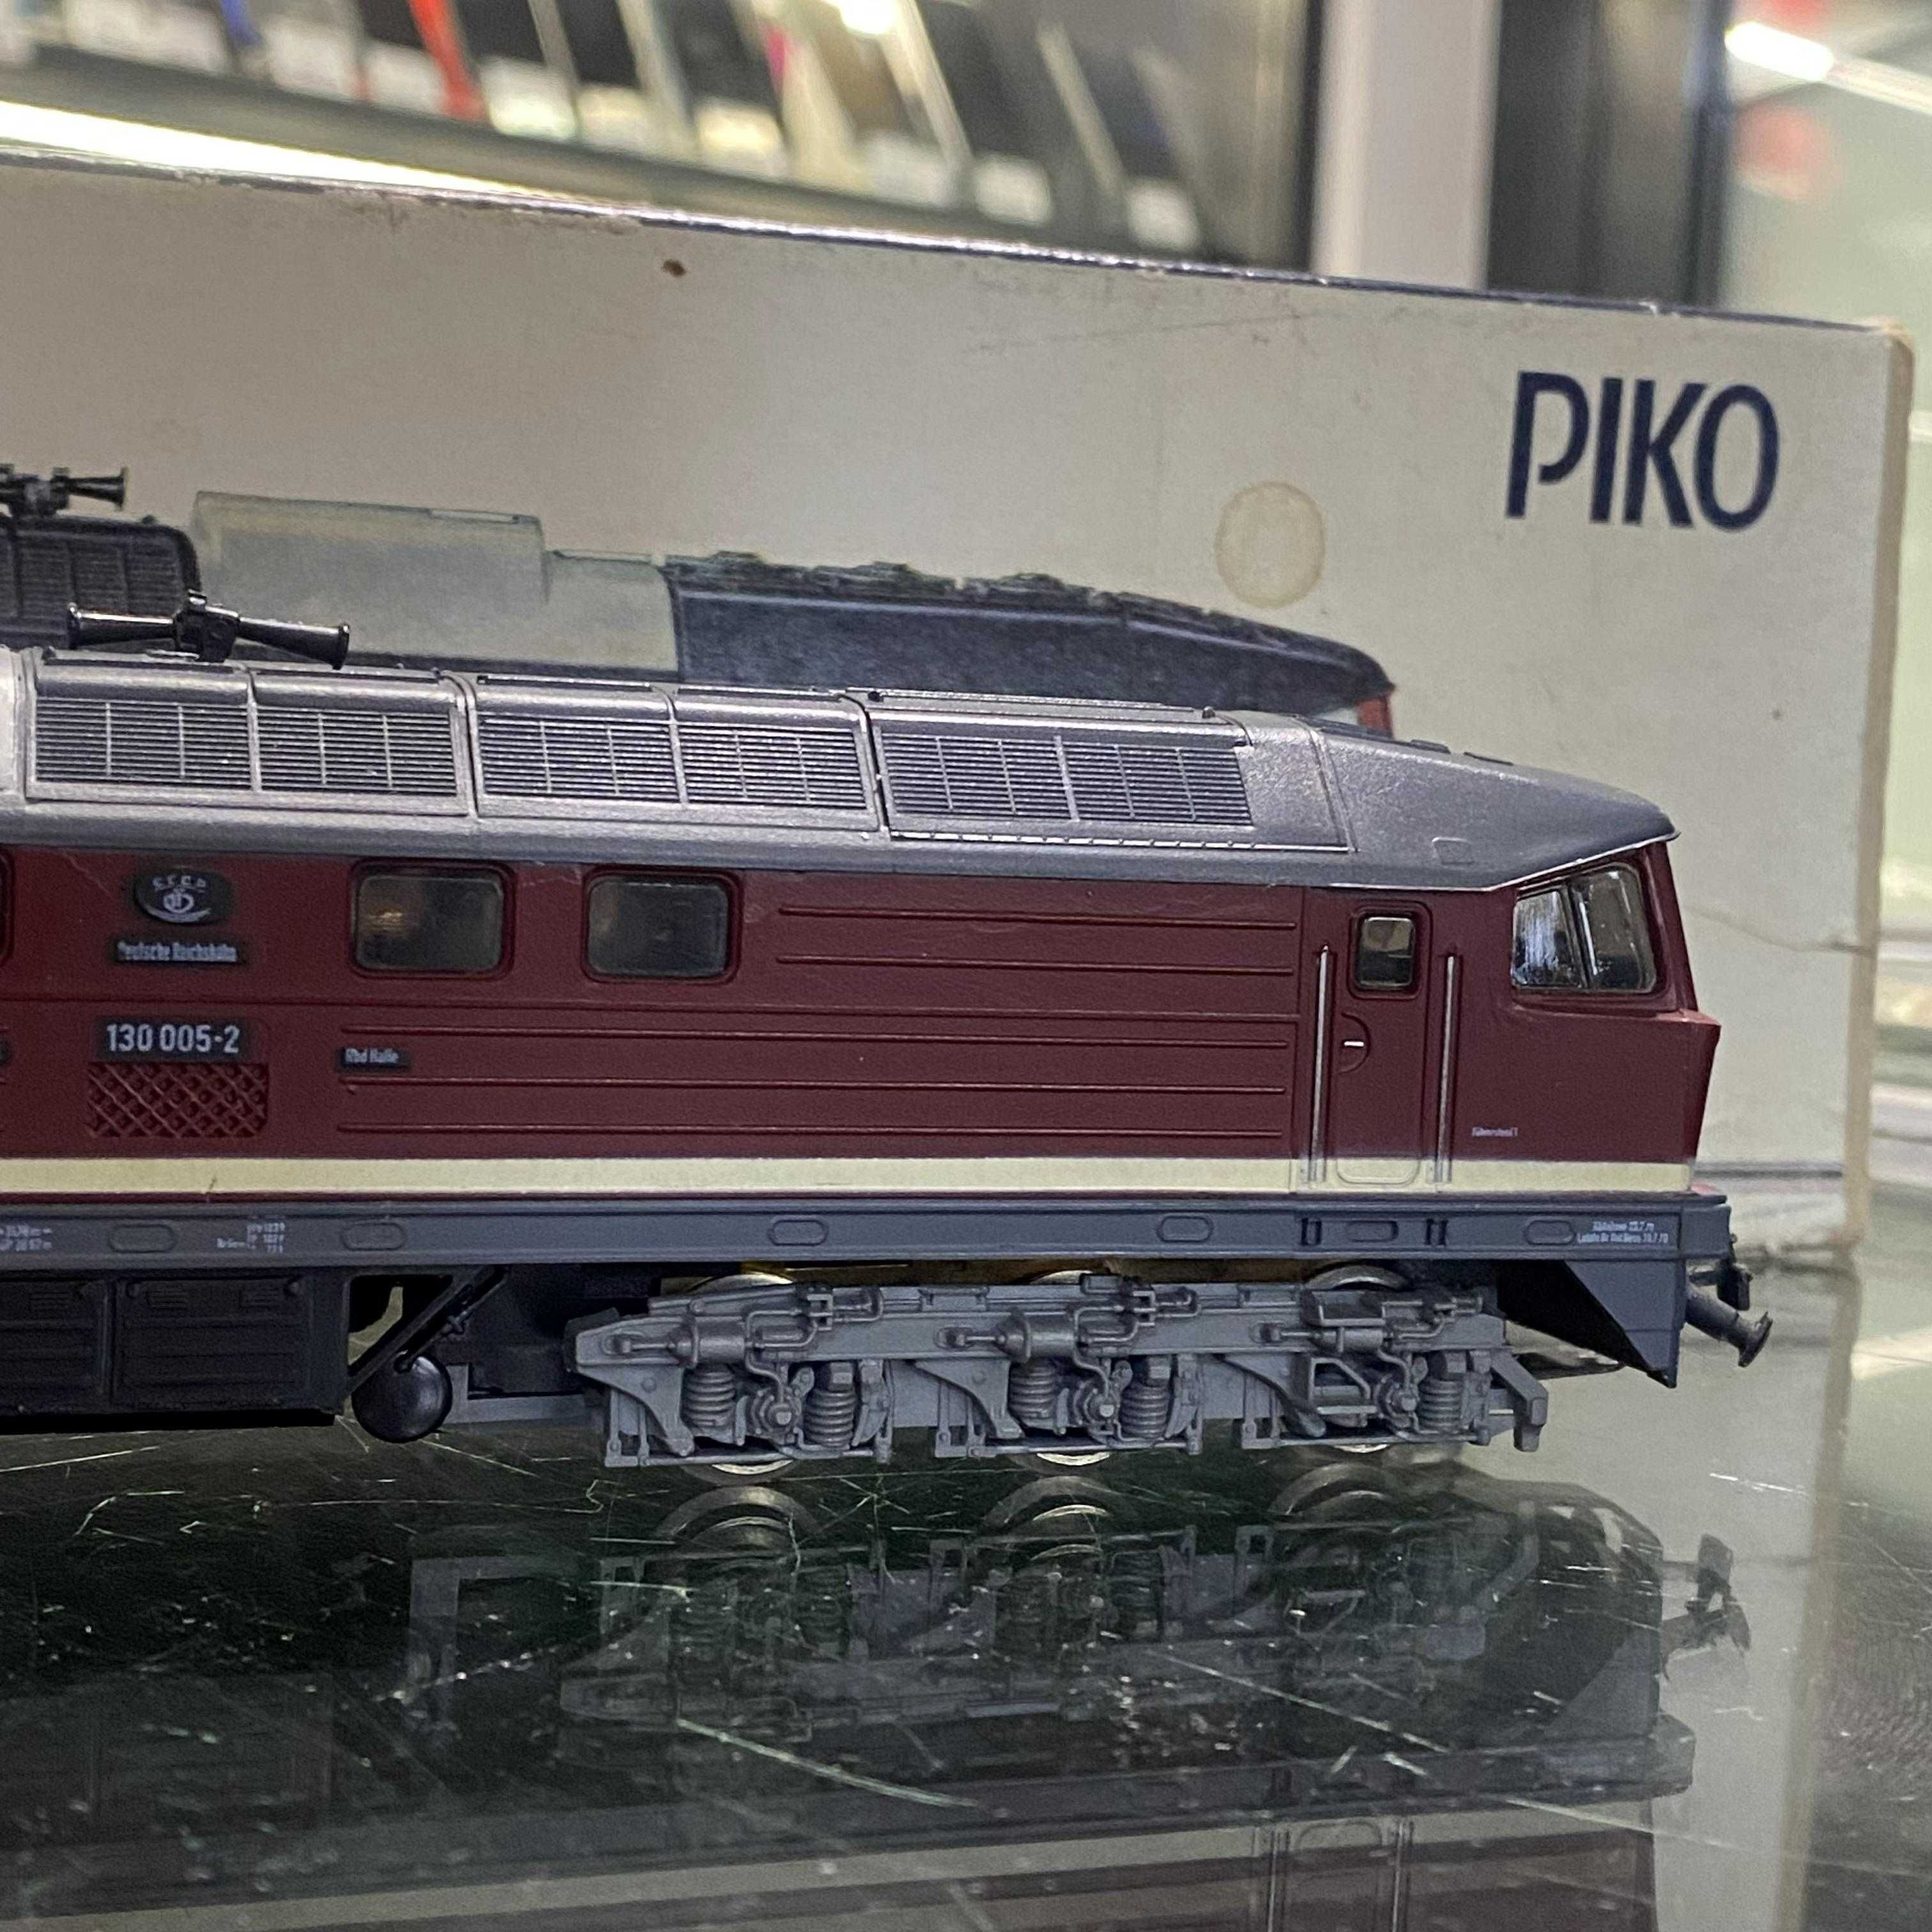 Piko BR 130 Lokomotywa Diesellokomotive + Pudełko i papiery